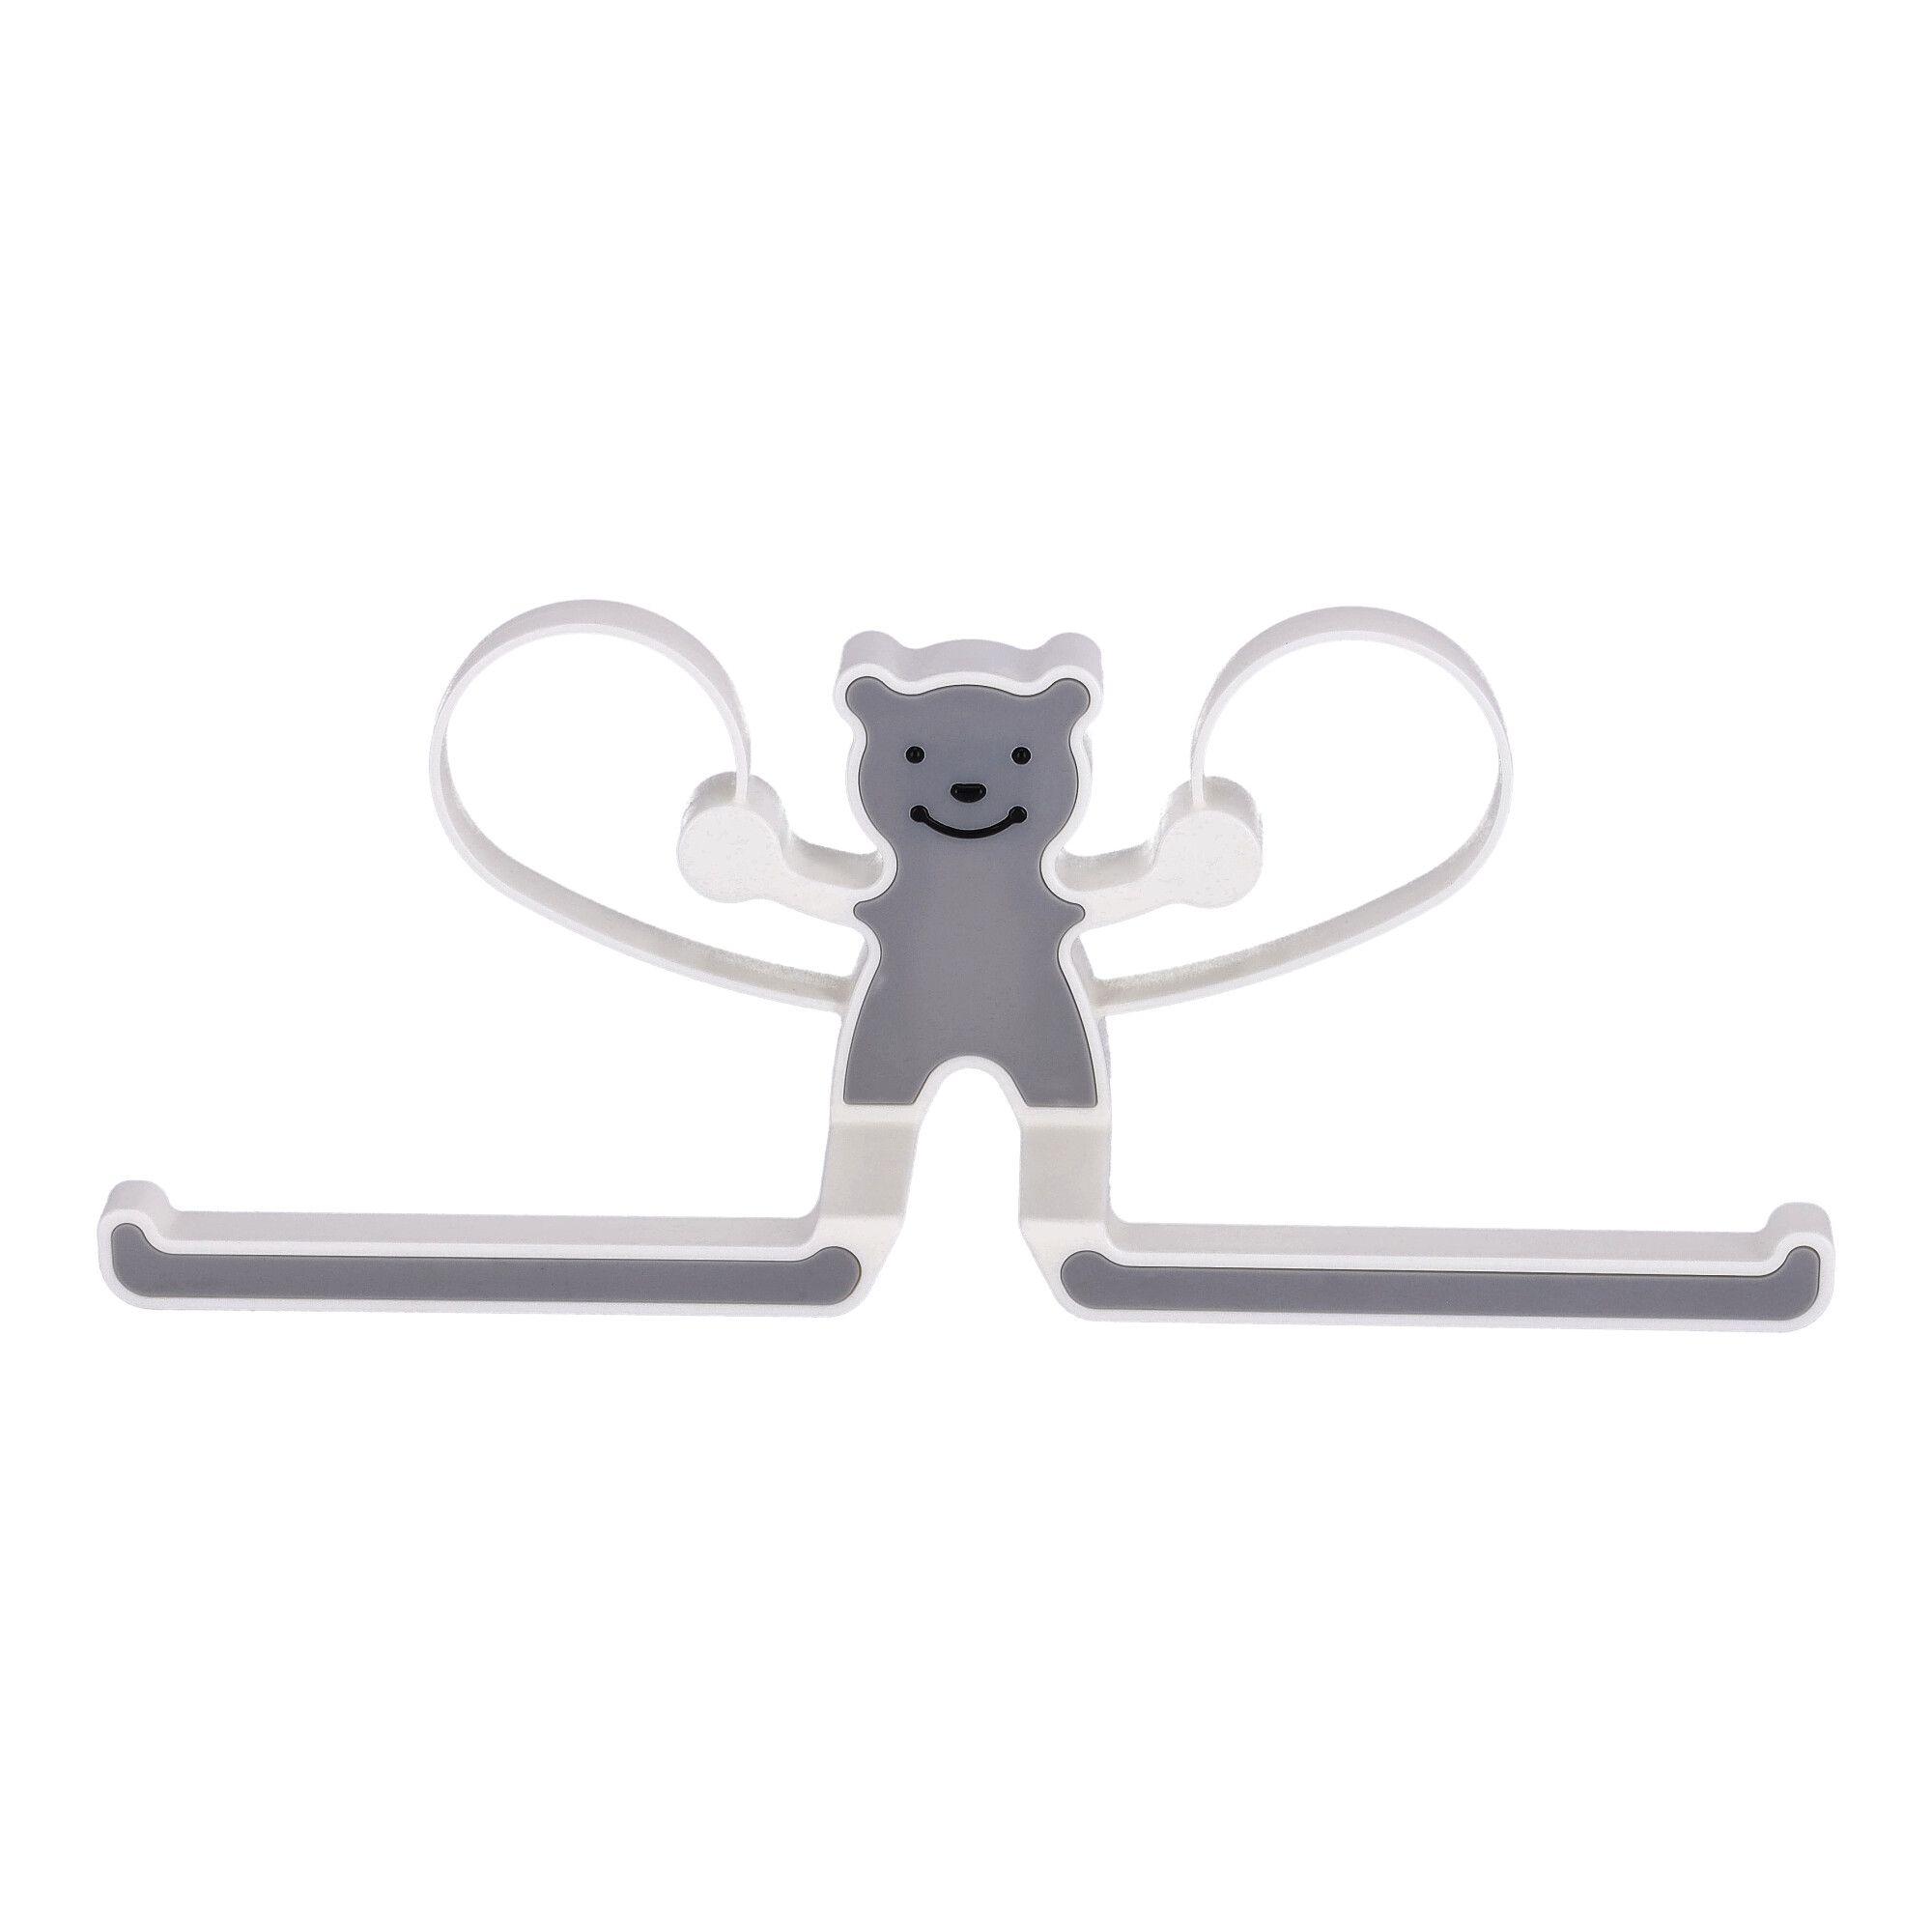 Multifunctional hanger with teddy bear - gray.